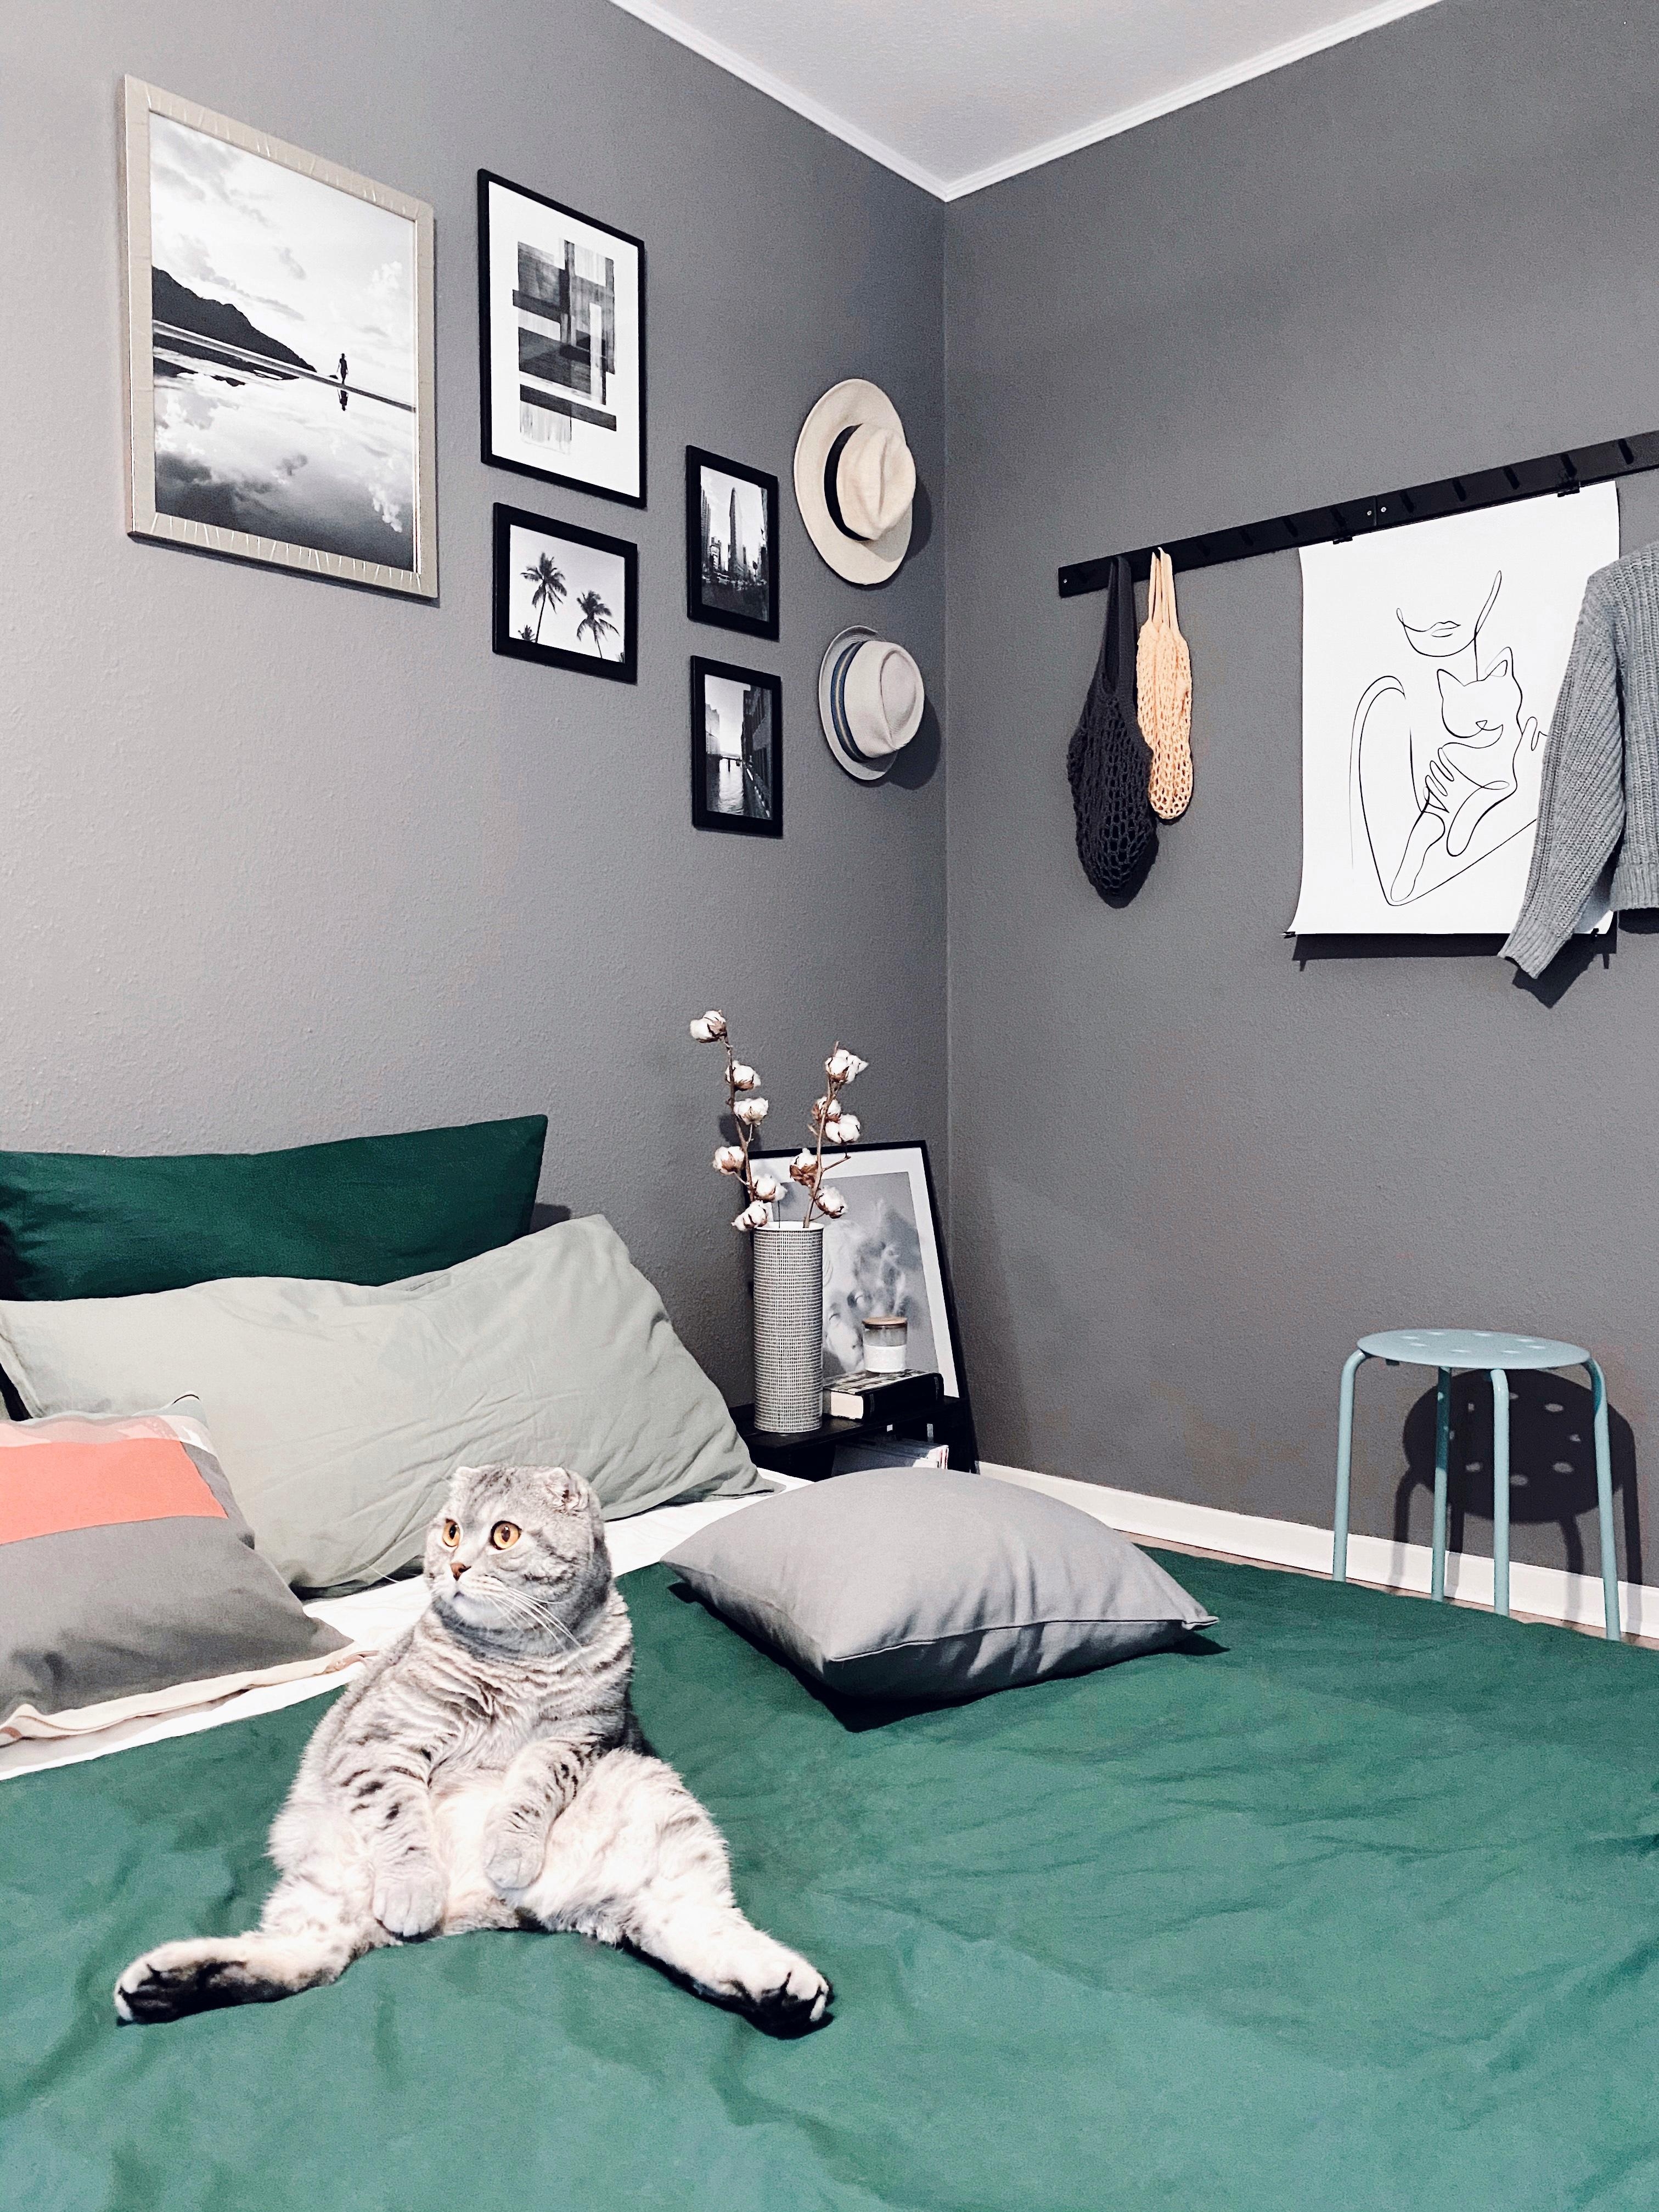 Happy Friday! 
#catlover #bedroom #mynordicroom #Interior #bedroominspo #hygge #monochrome